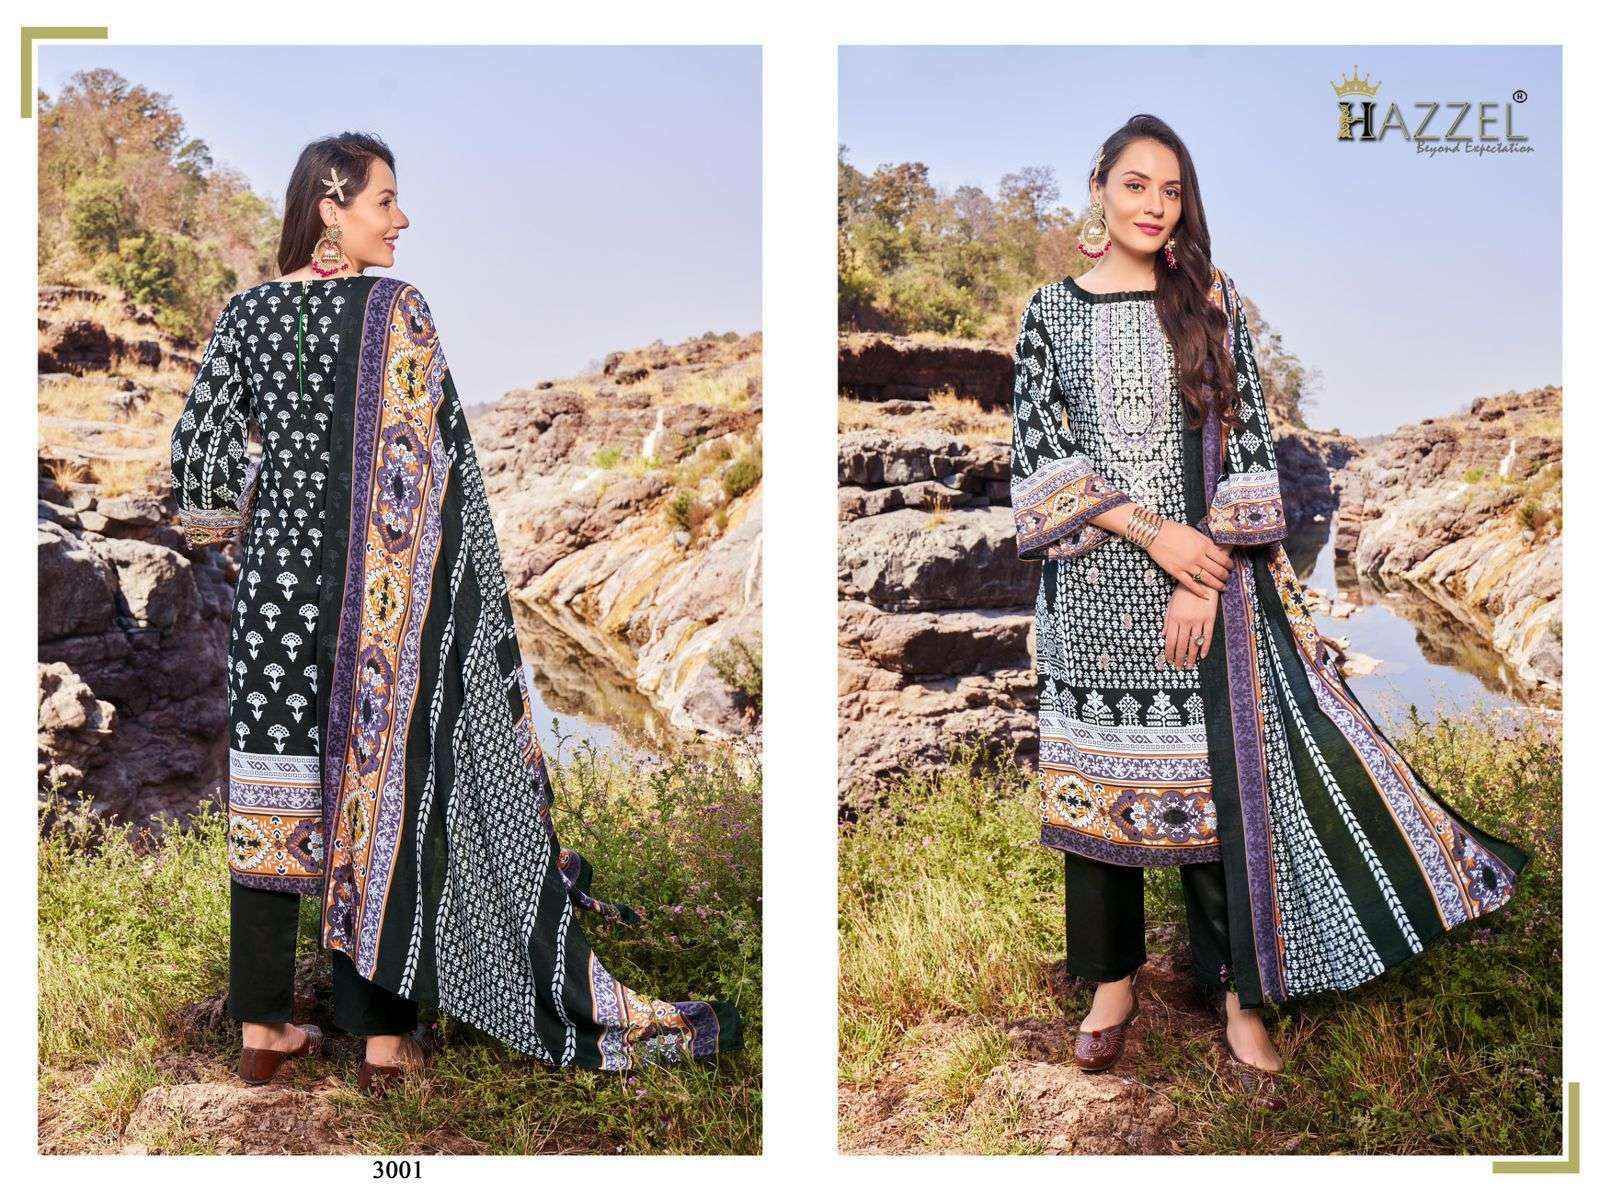 Hazzel Bin Saeed Vol 3 Lawn Cotton Dress Material 2 pcs Catalogue